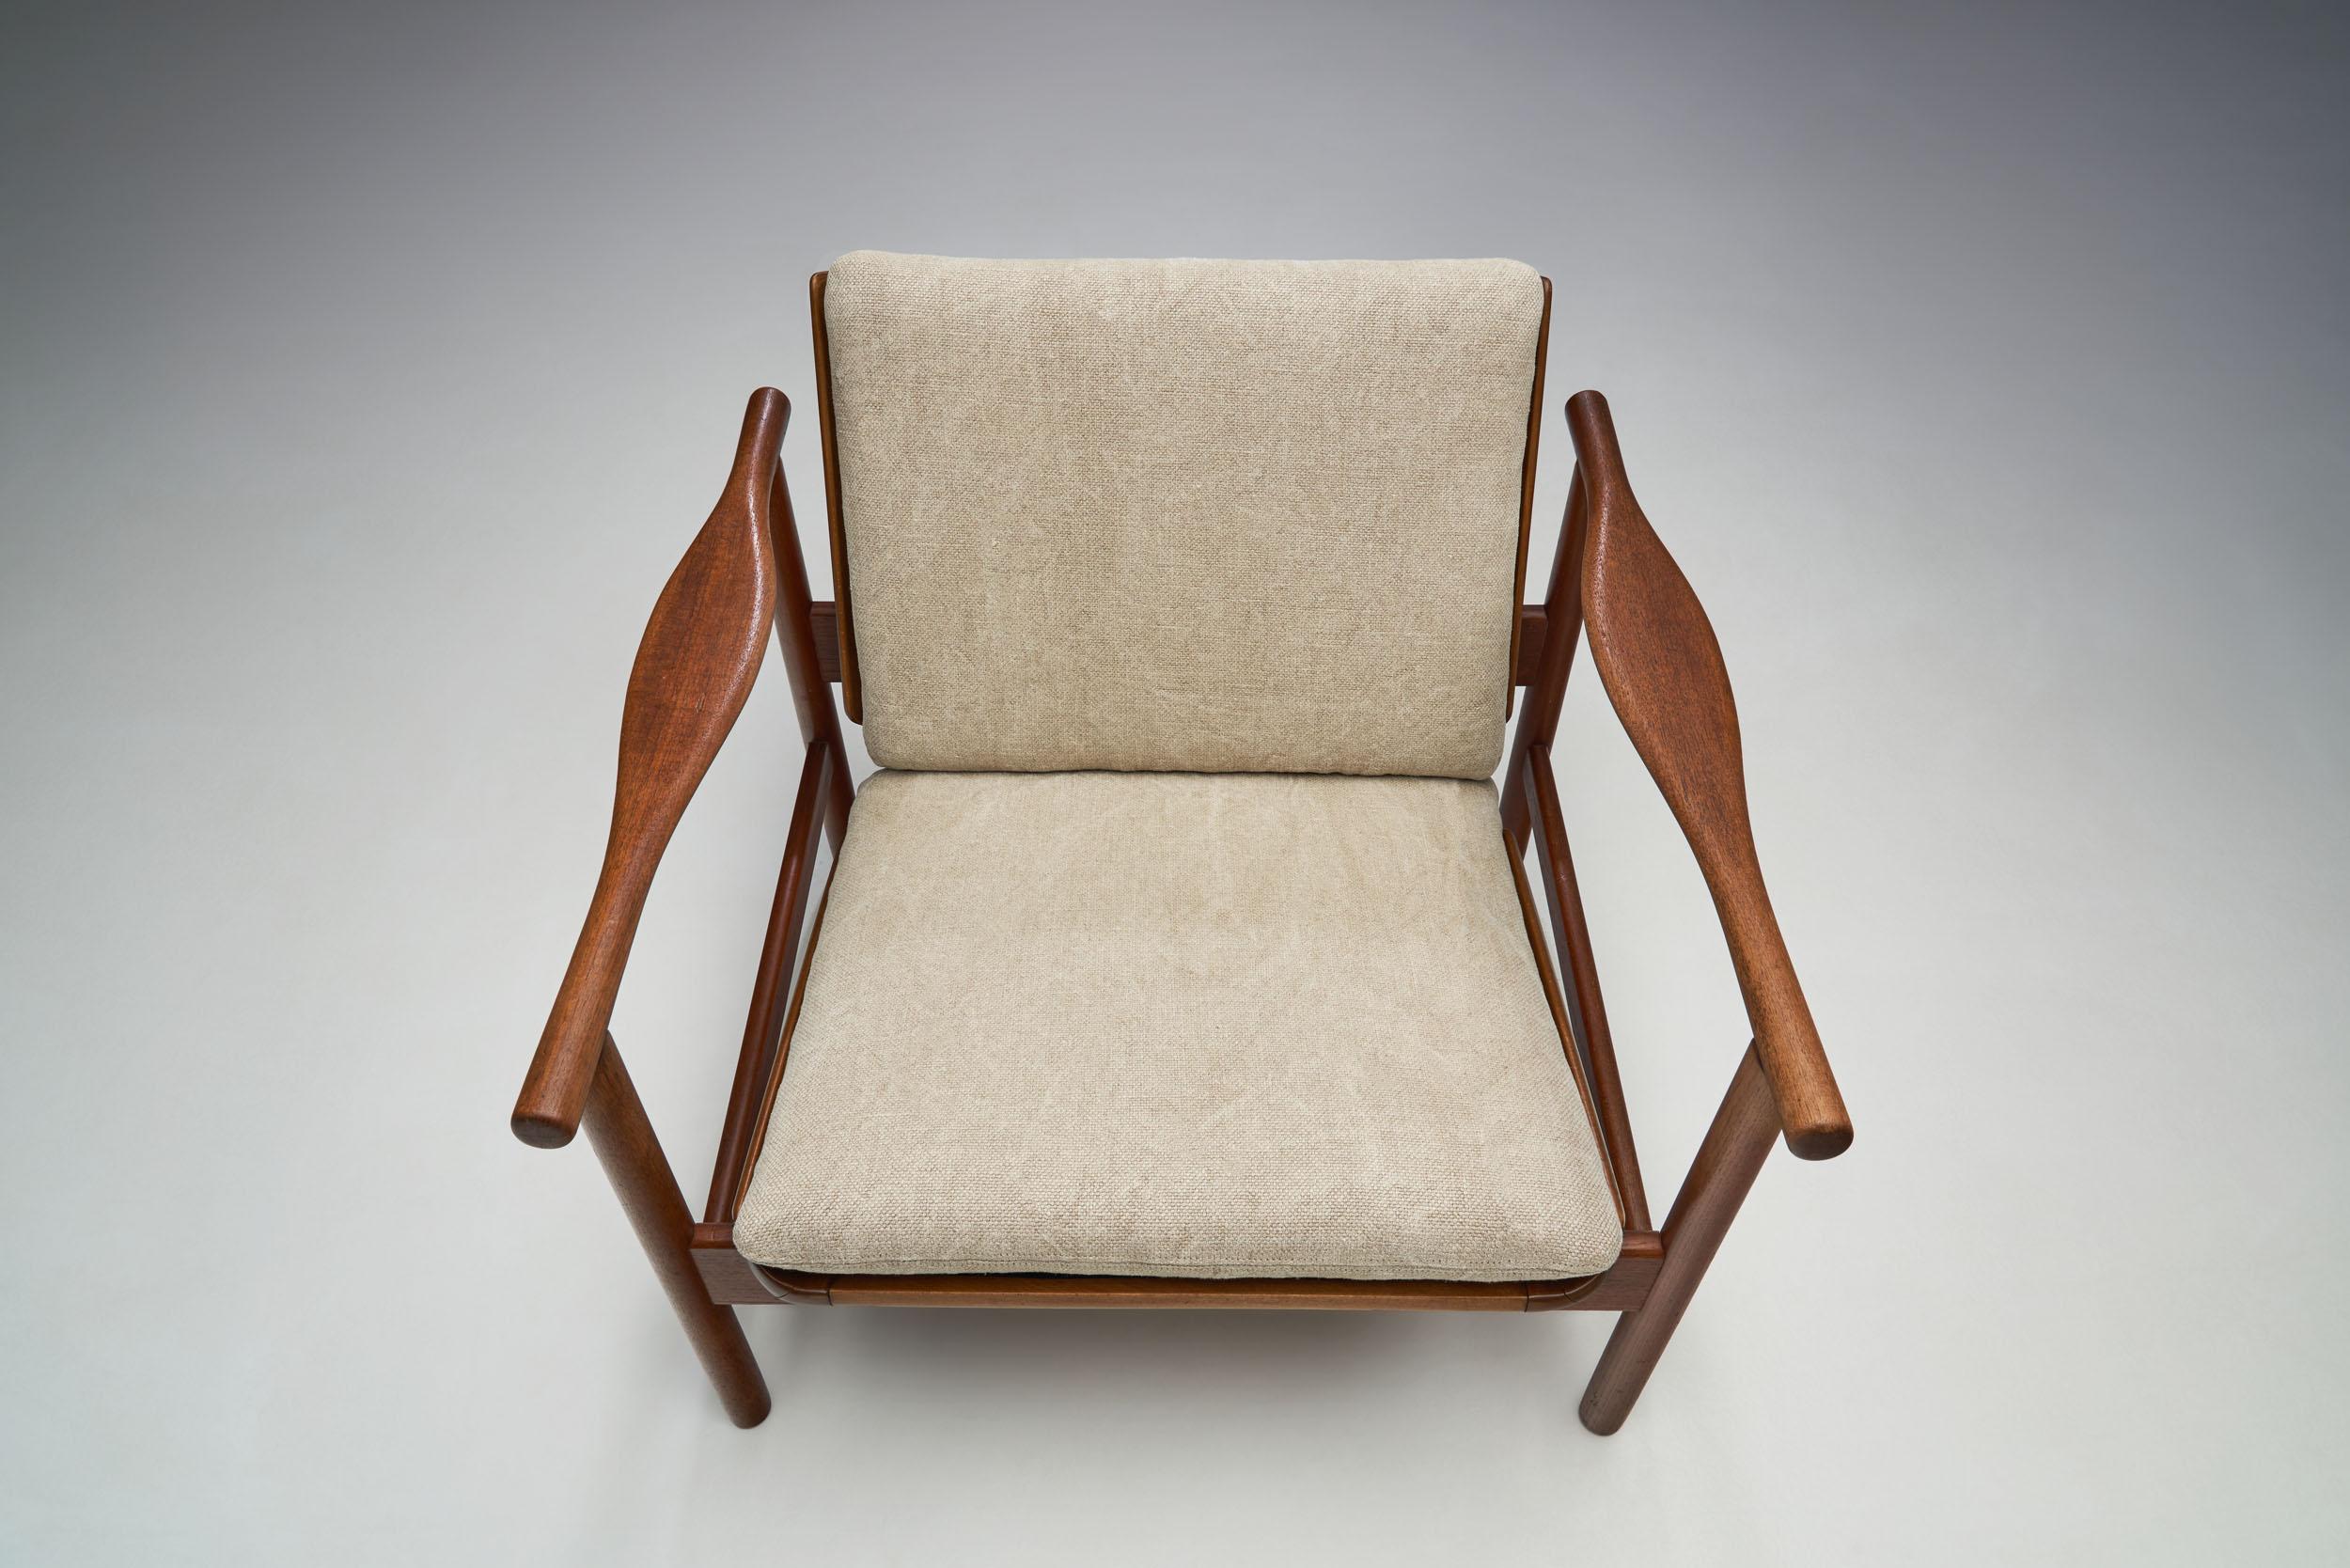 Solid Teak Danish Lounge Chair, Denmark 1950s For Sale 1